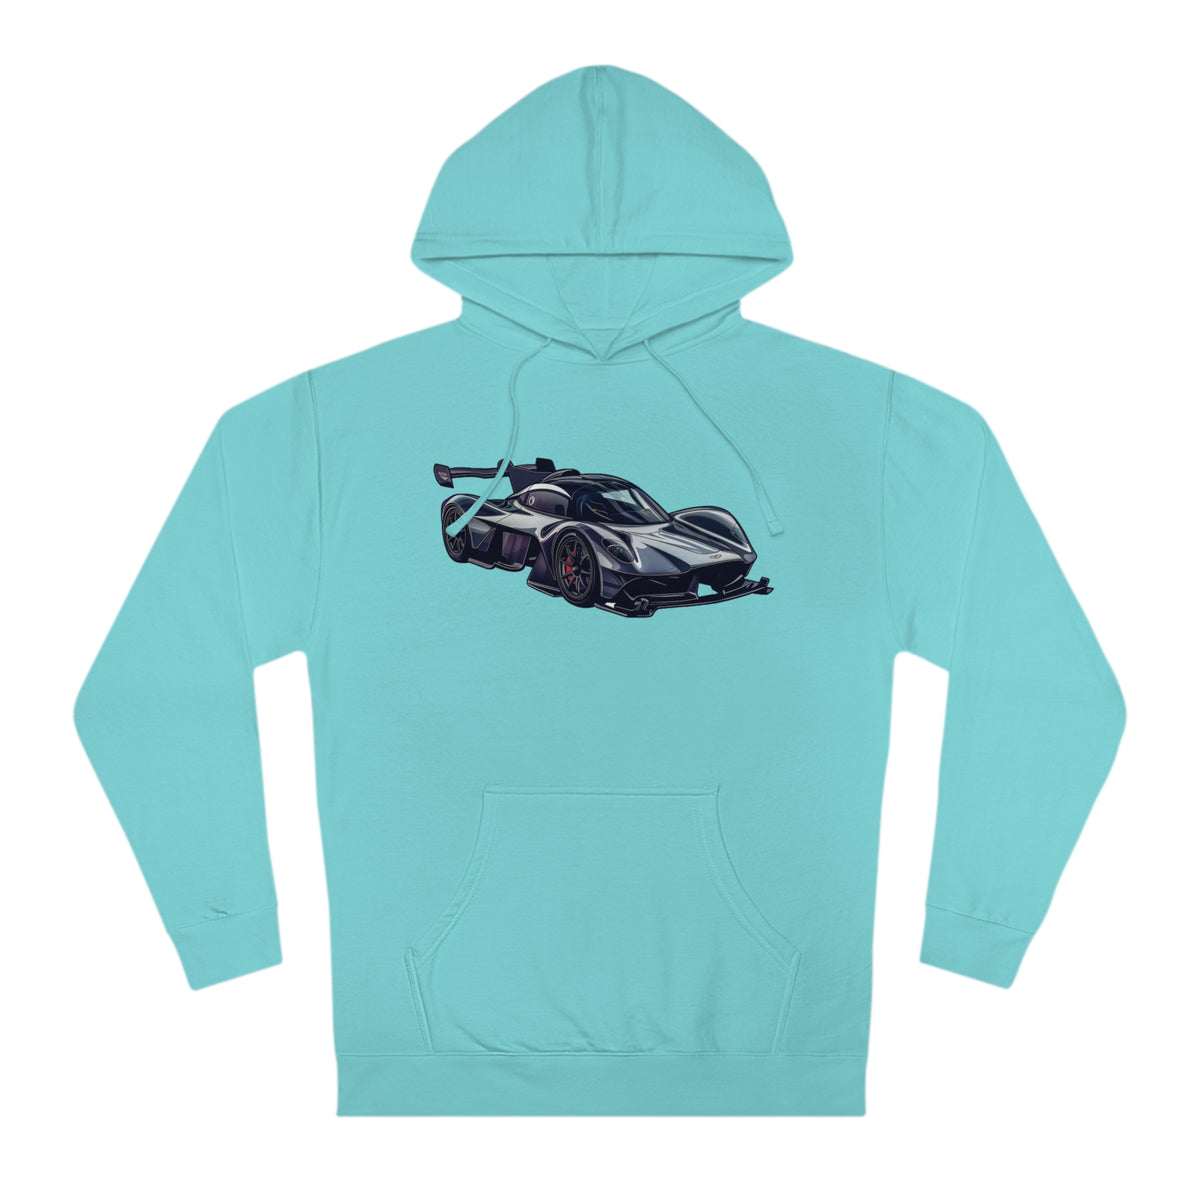 Track Titan Men's Hoodie with Hypercar Graphic Hooded Sweatshirt